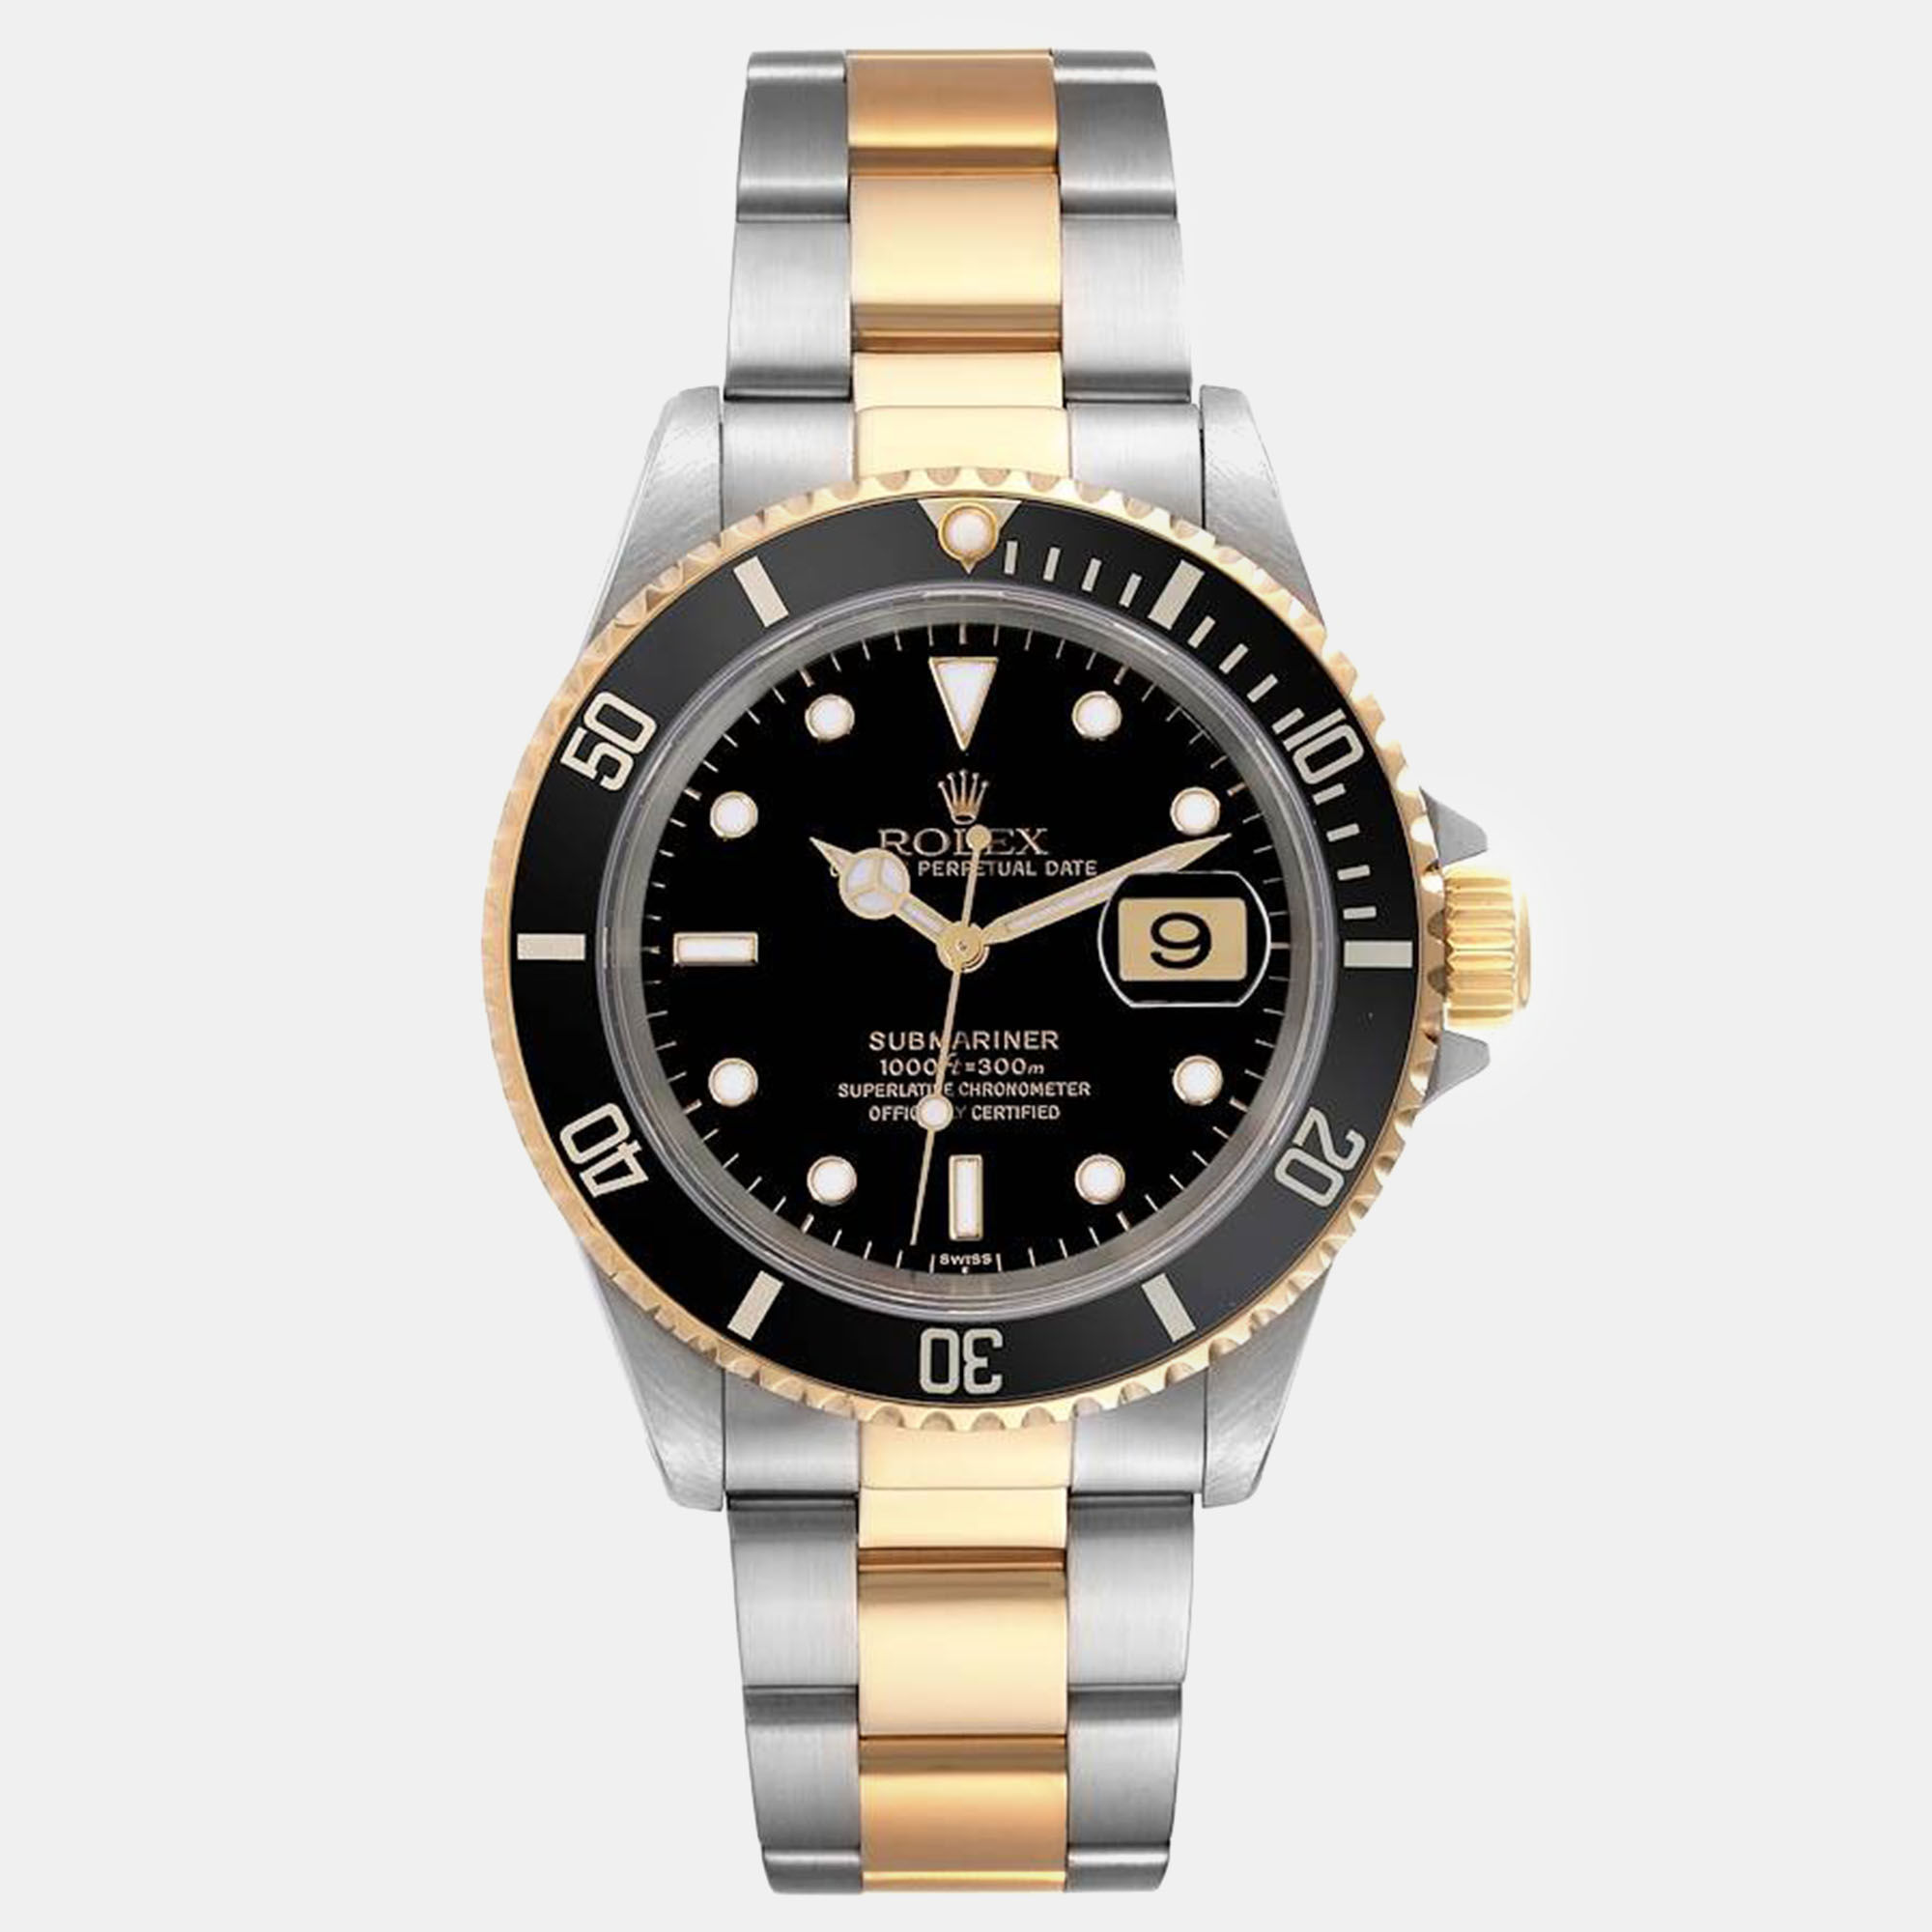 Rolex submariner steel yellow gold black dial men's watch 16613 40 mm